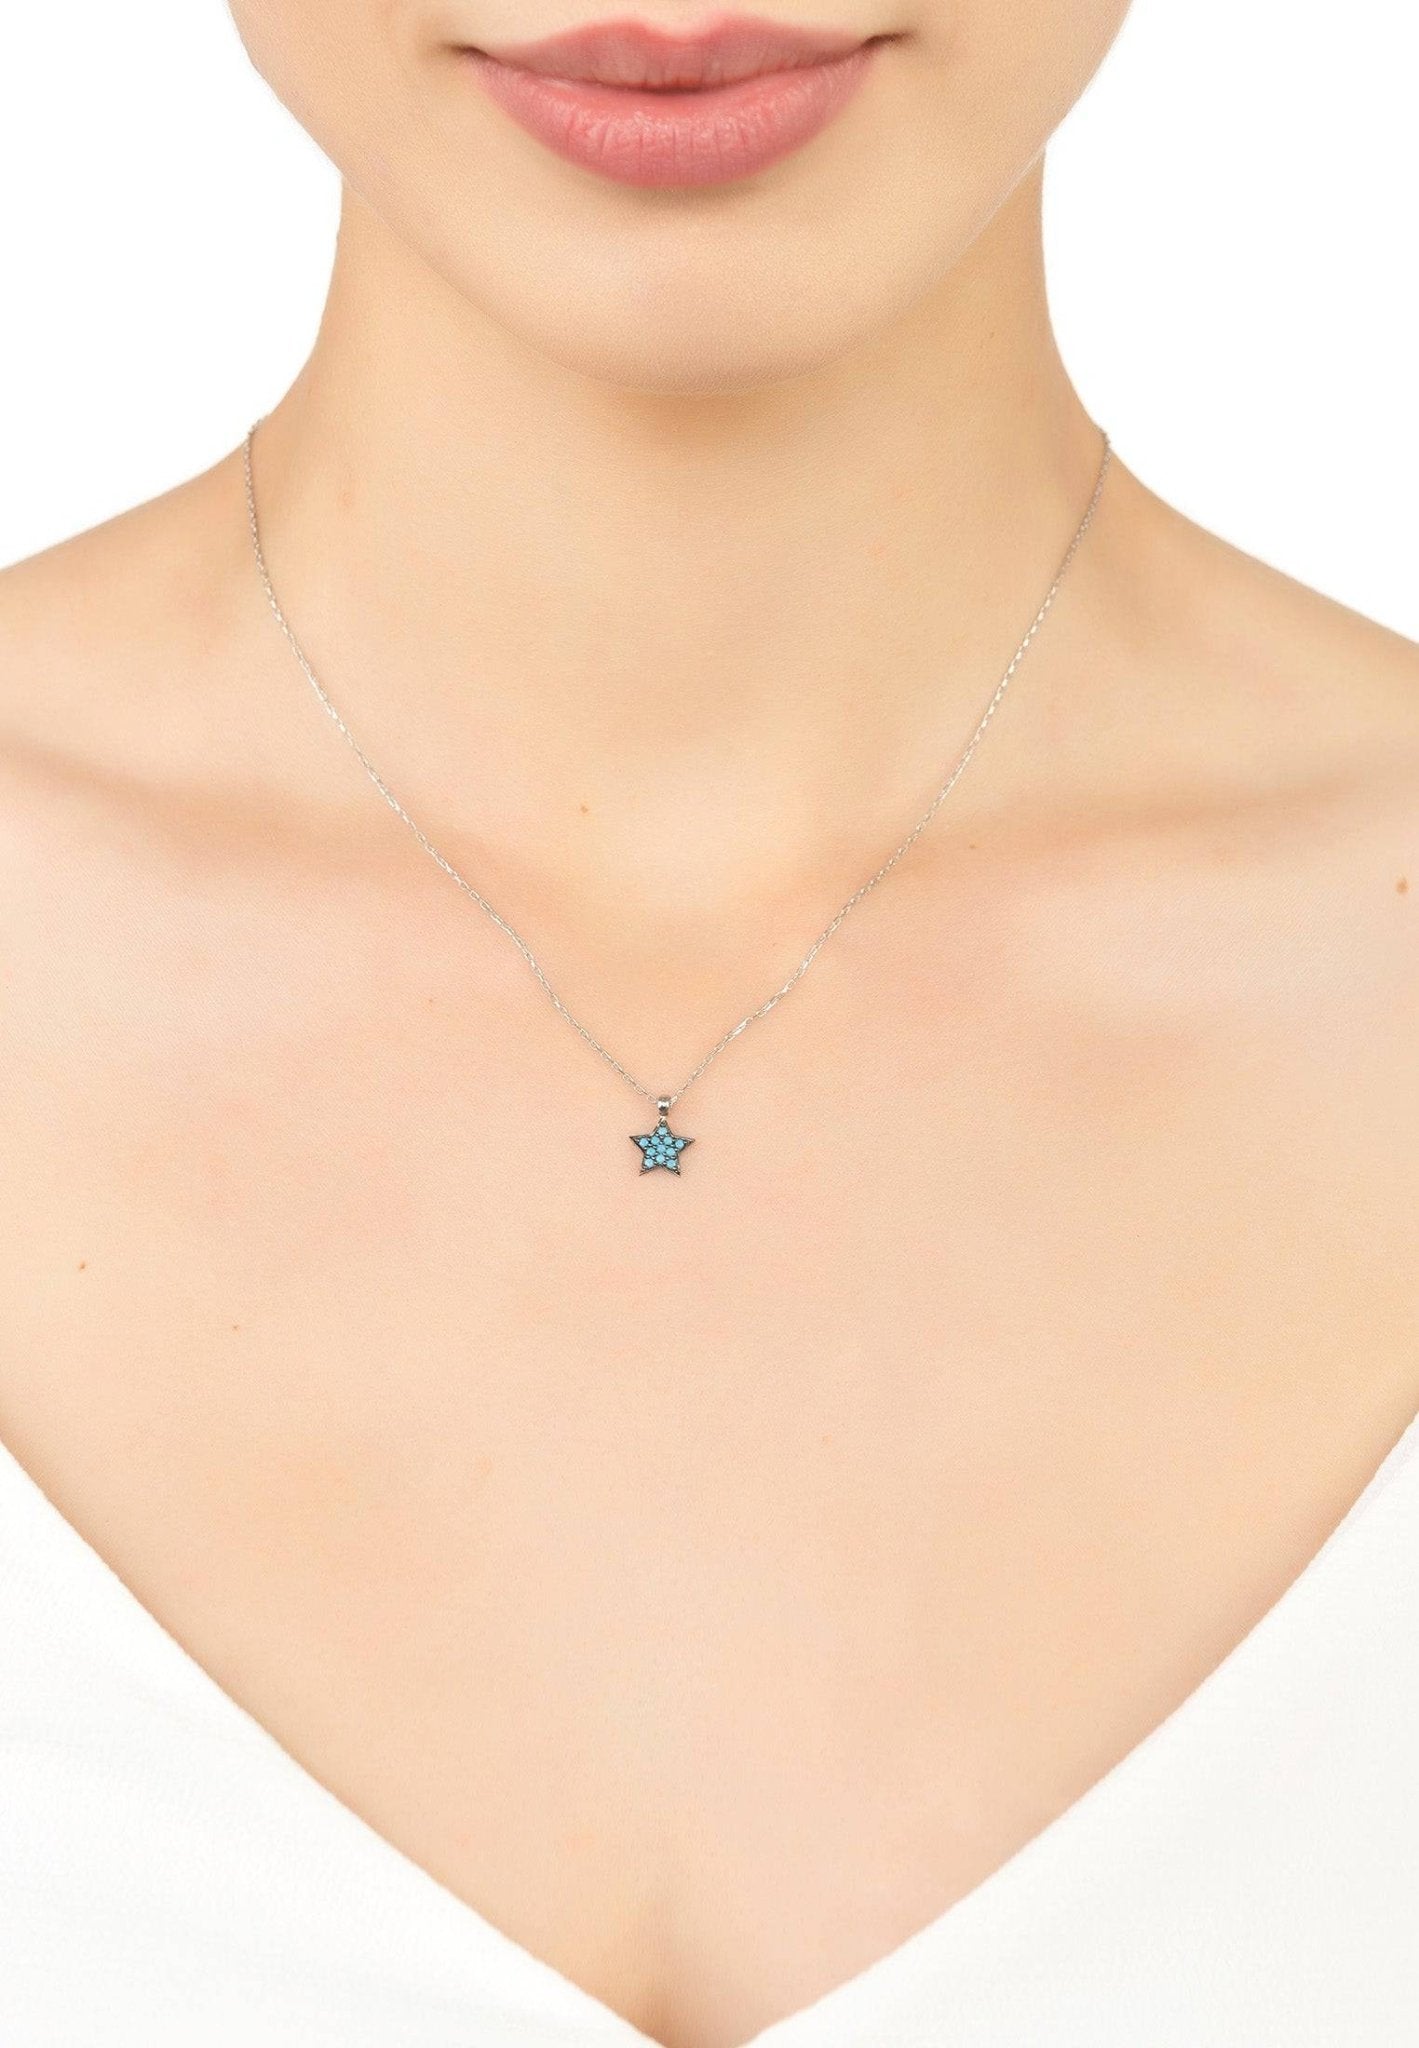 Star Turquoise Pendant Necklace Silver - LATELITA Necklaces